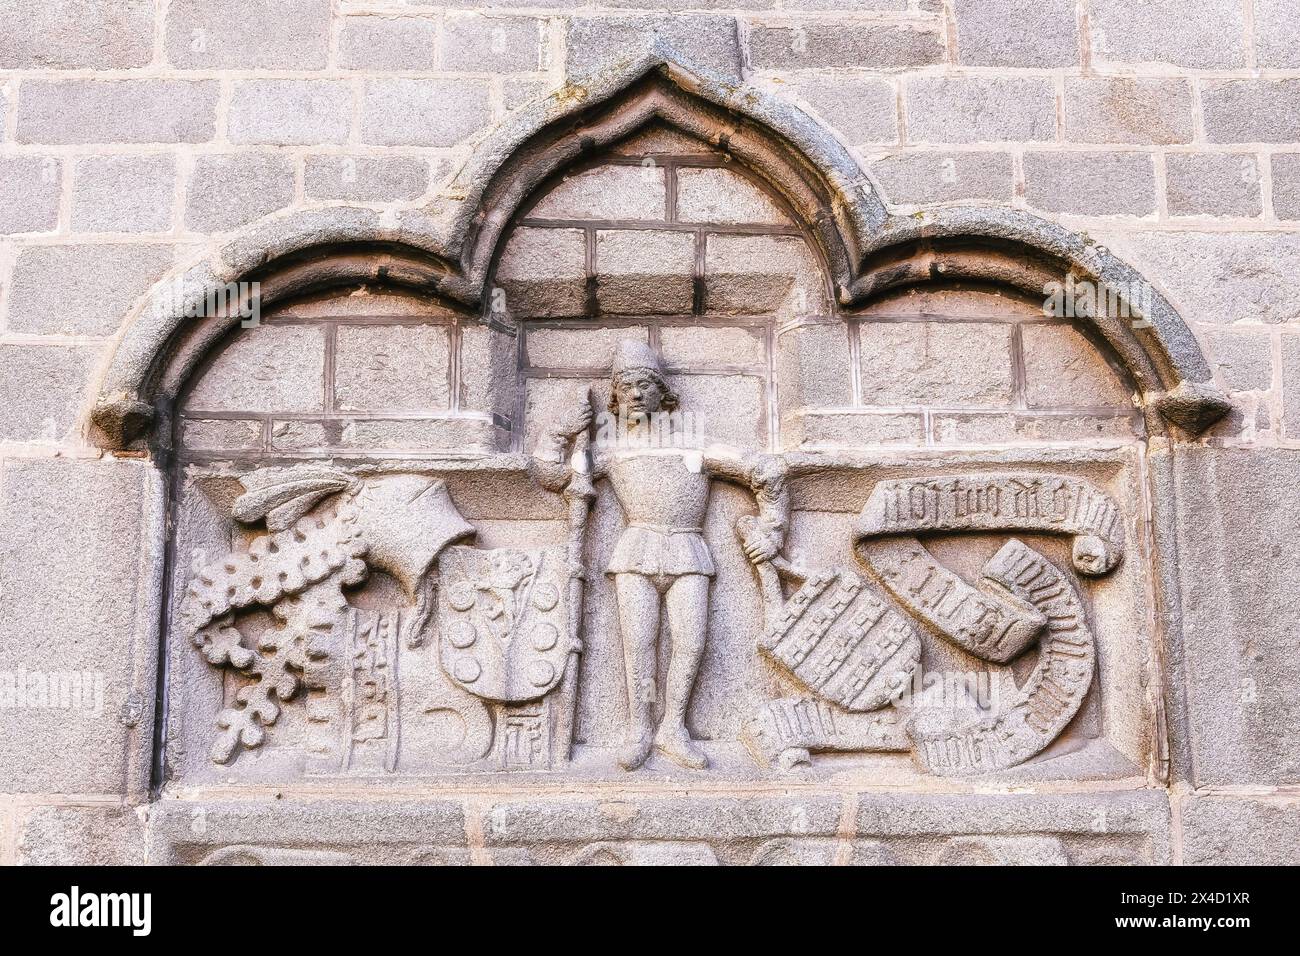 Stone decoration carving on the facade of the Hotel Palace Varderrabnos, Avila, Spain Stock Photo